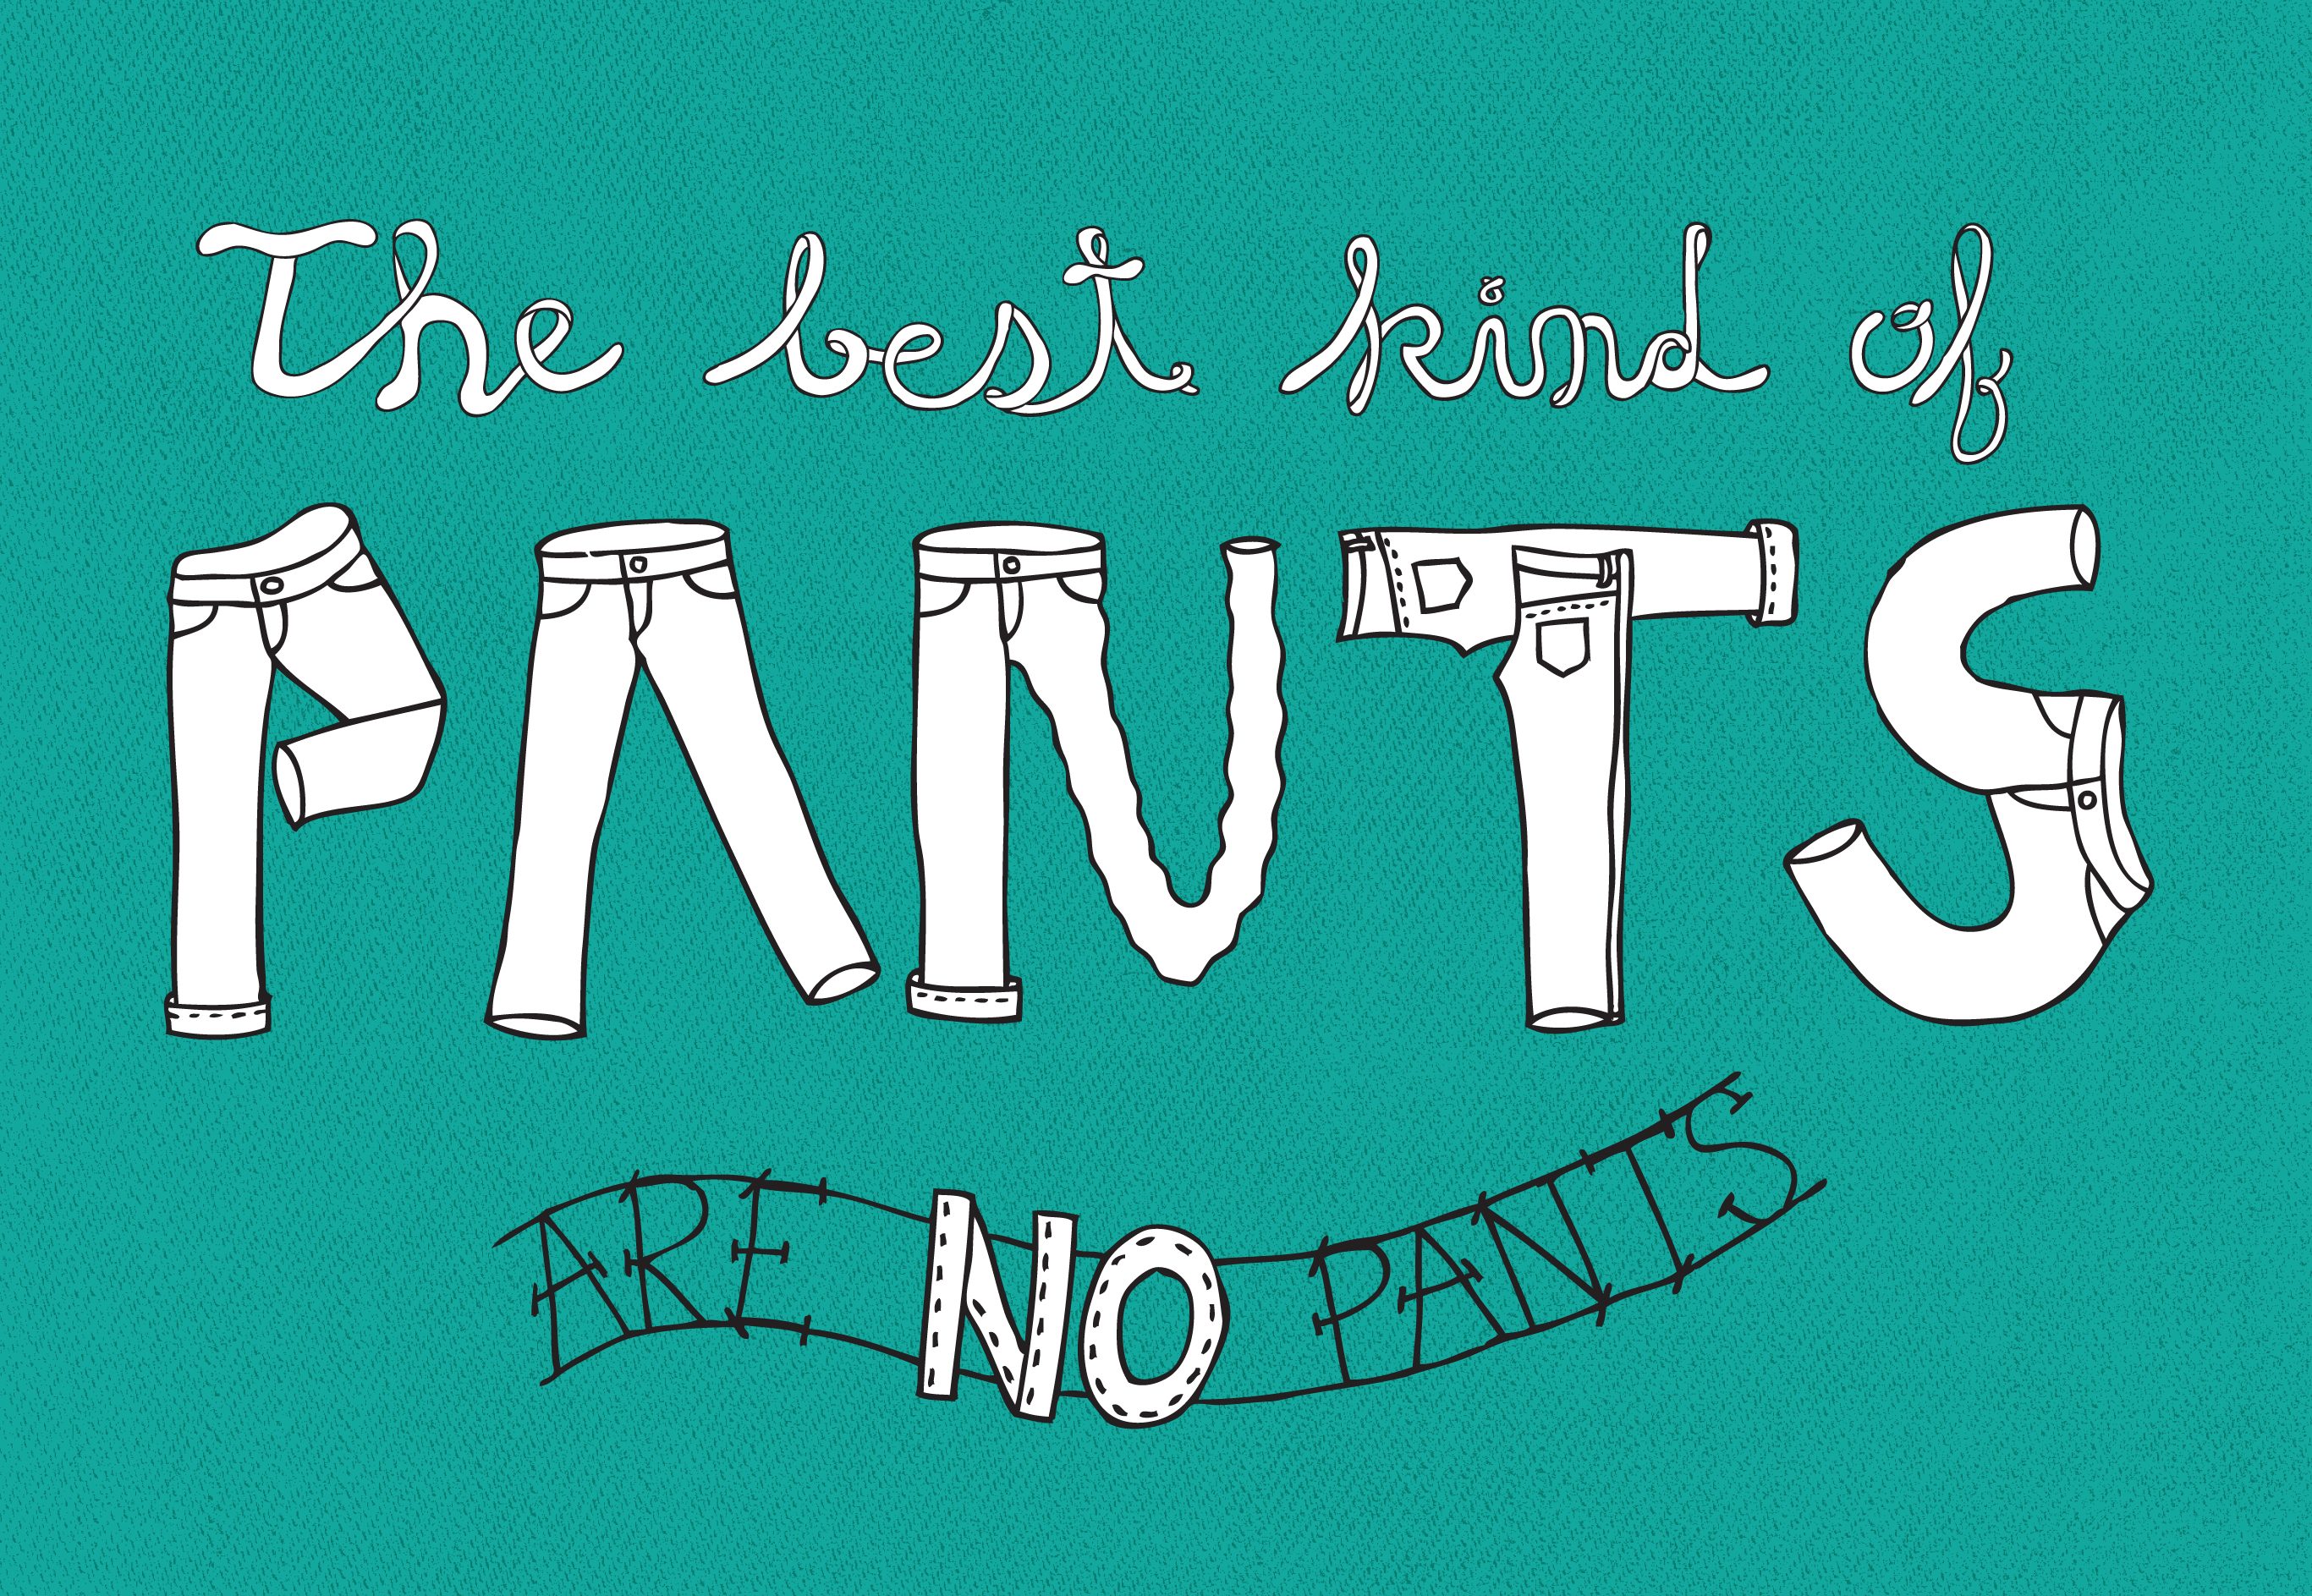 Kind good. Sans Pants. I hate Pants.